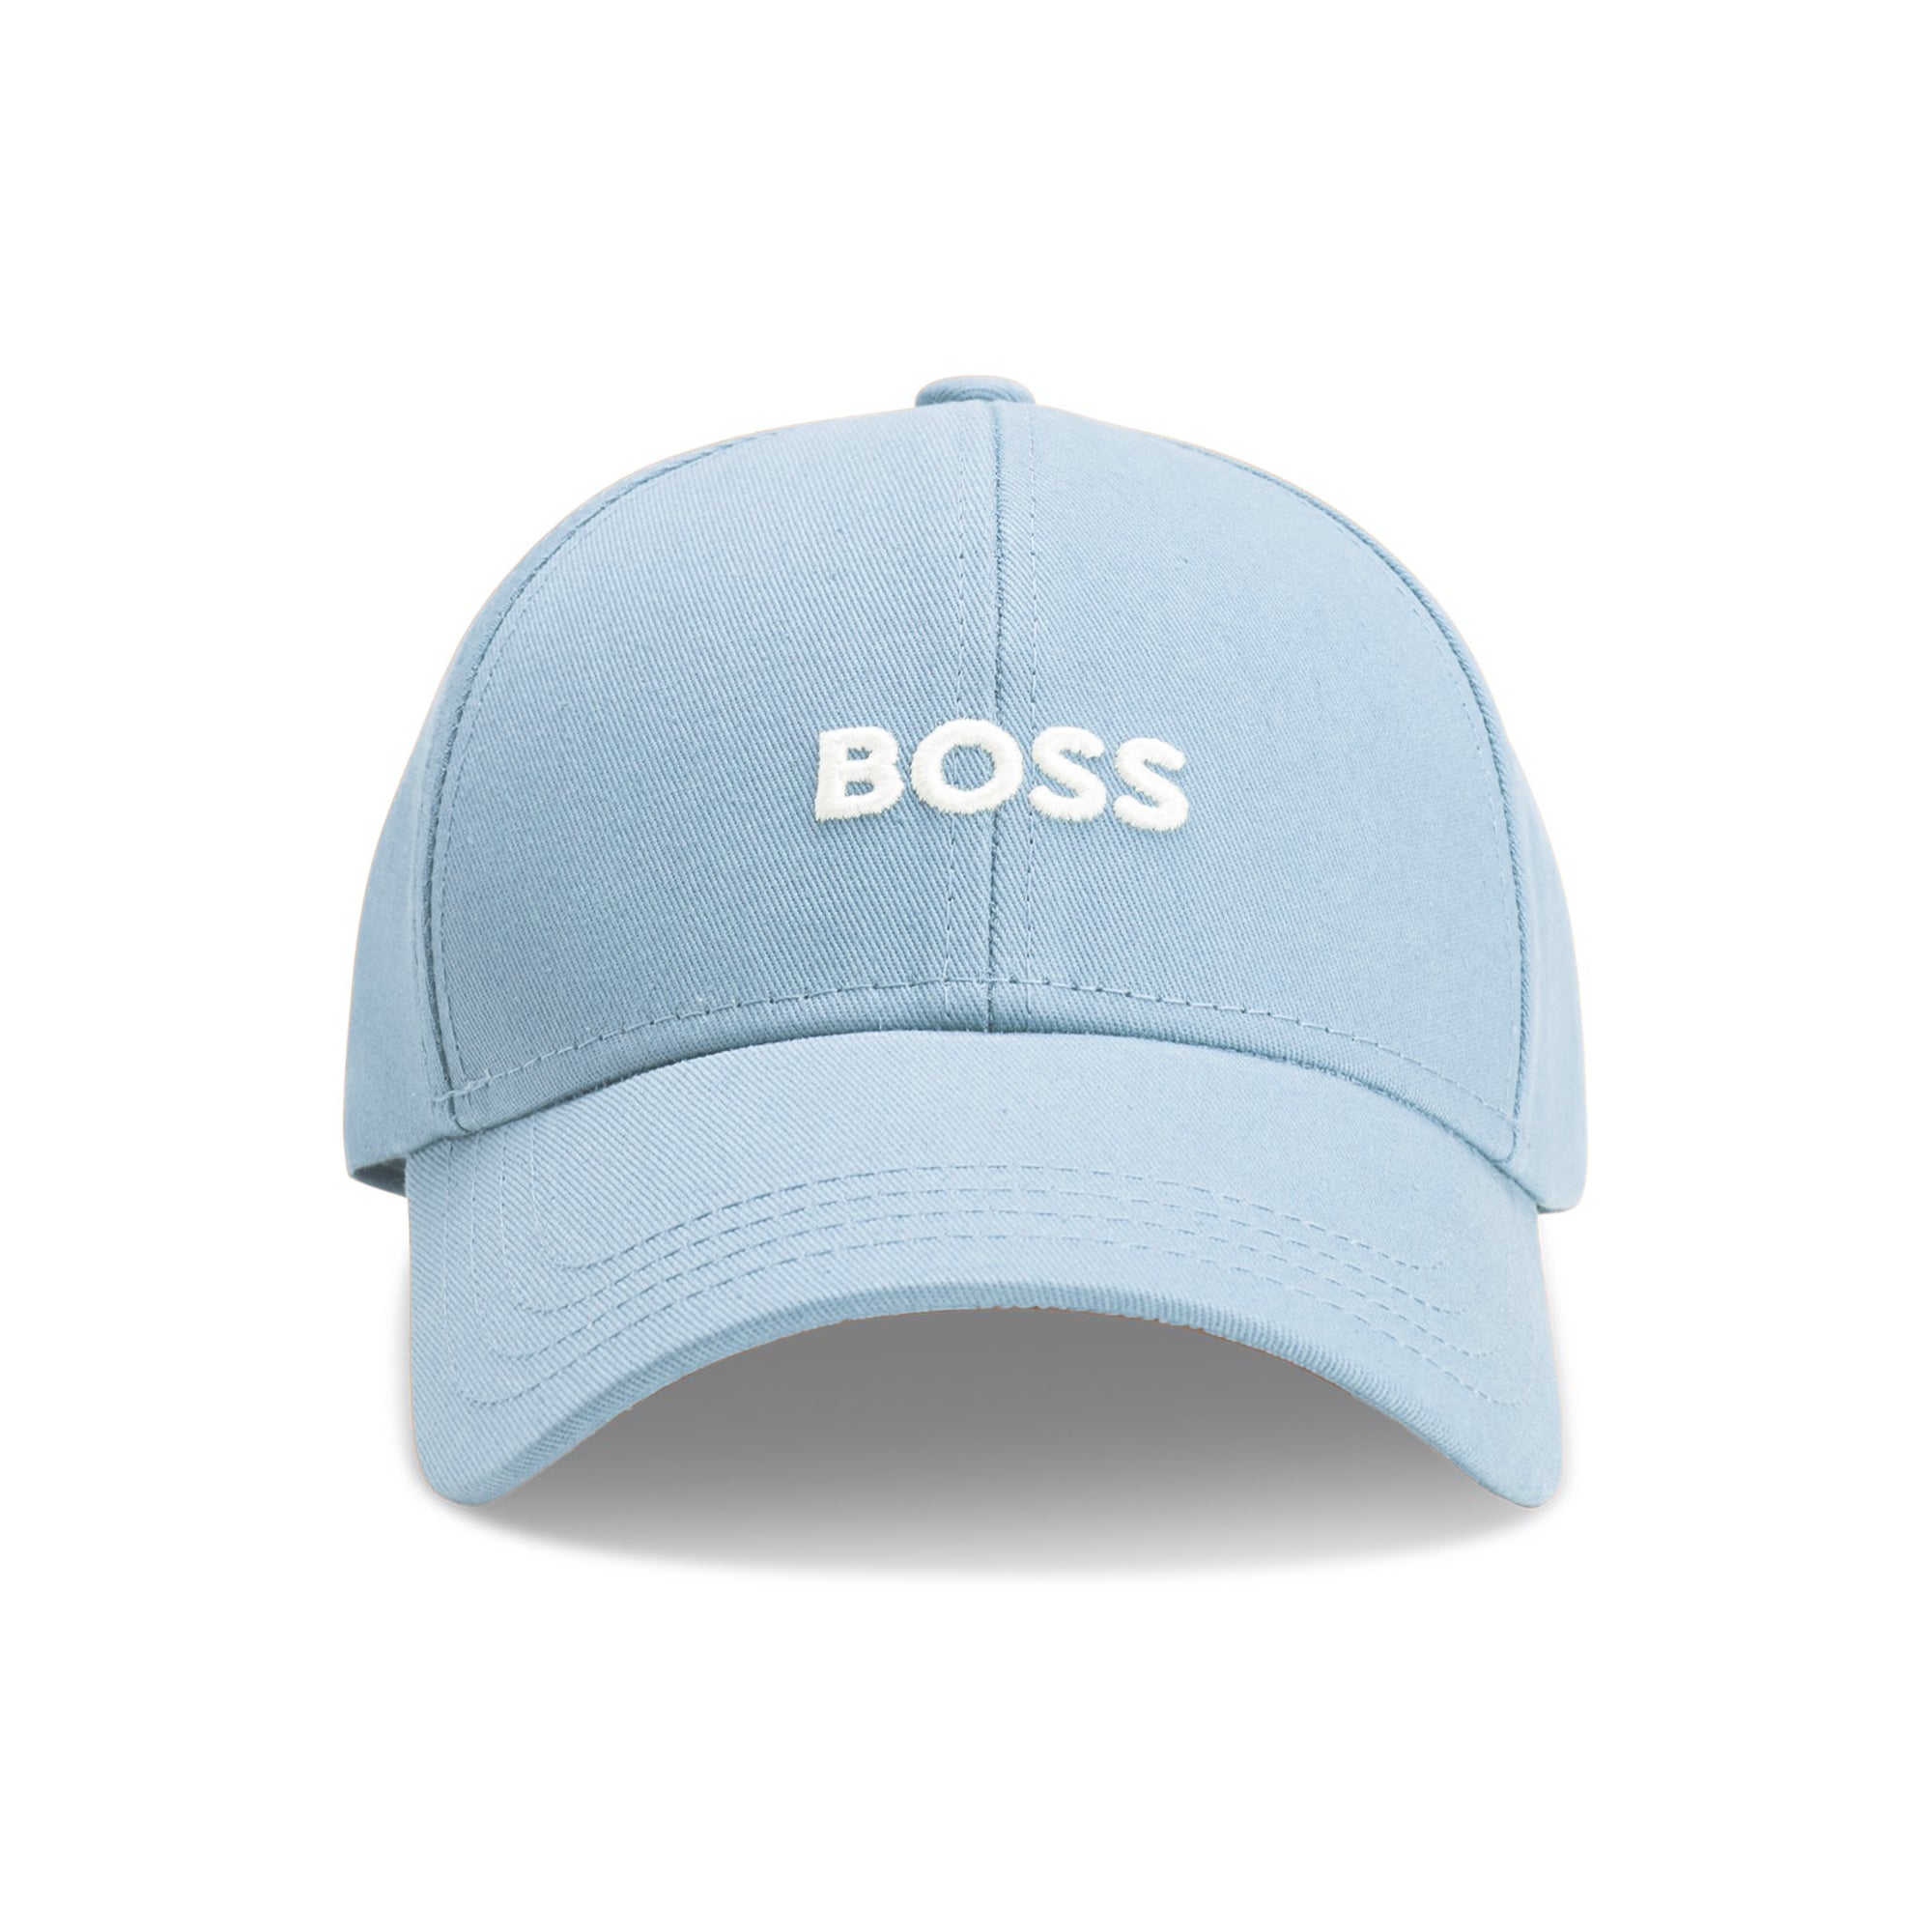 Boss Zed Embroidered Cotton Cap - Open Blue